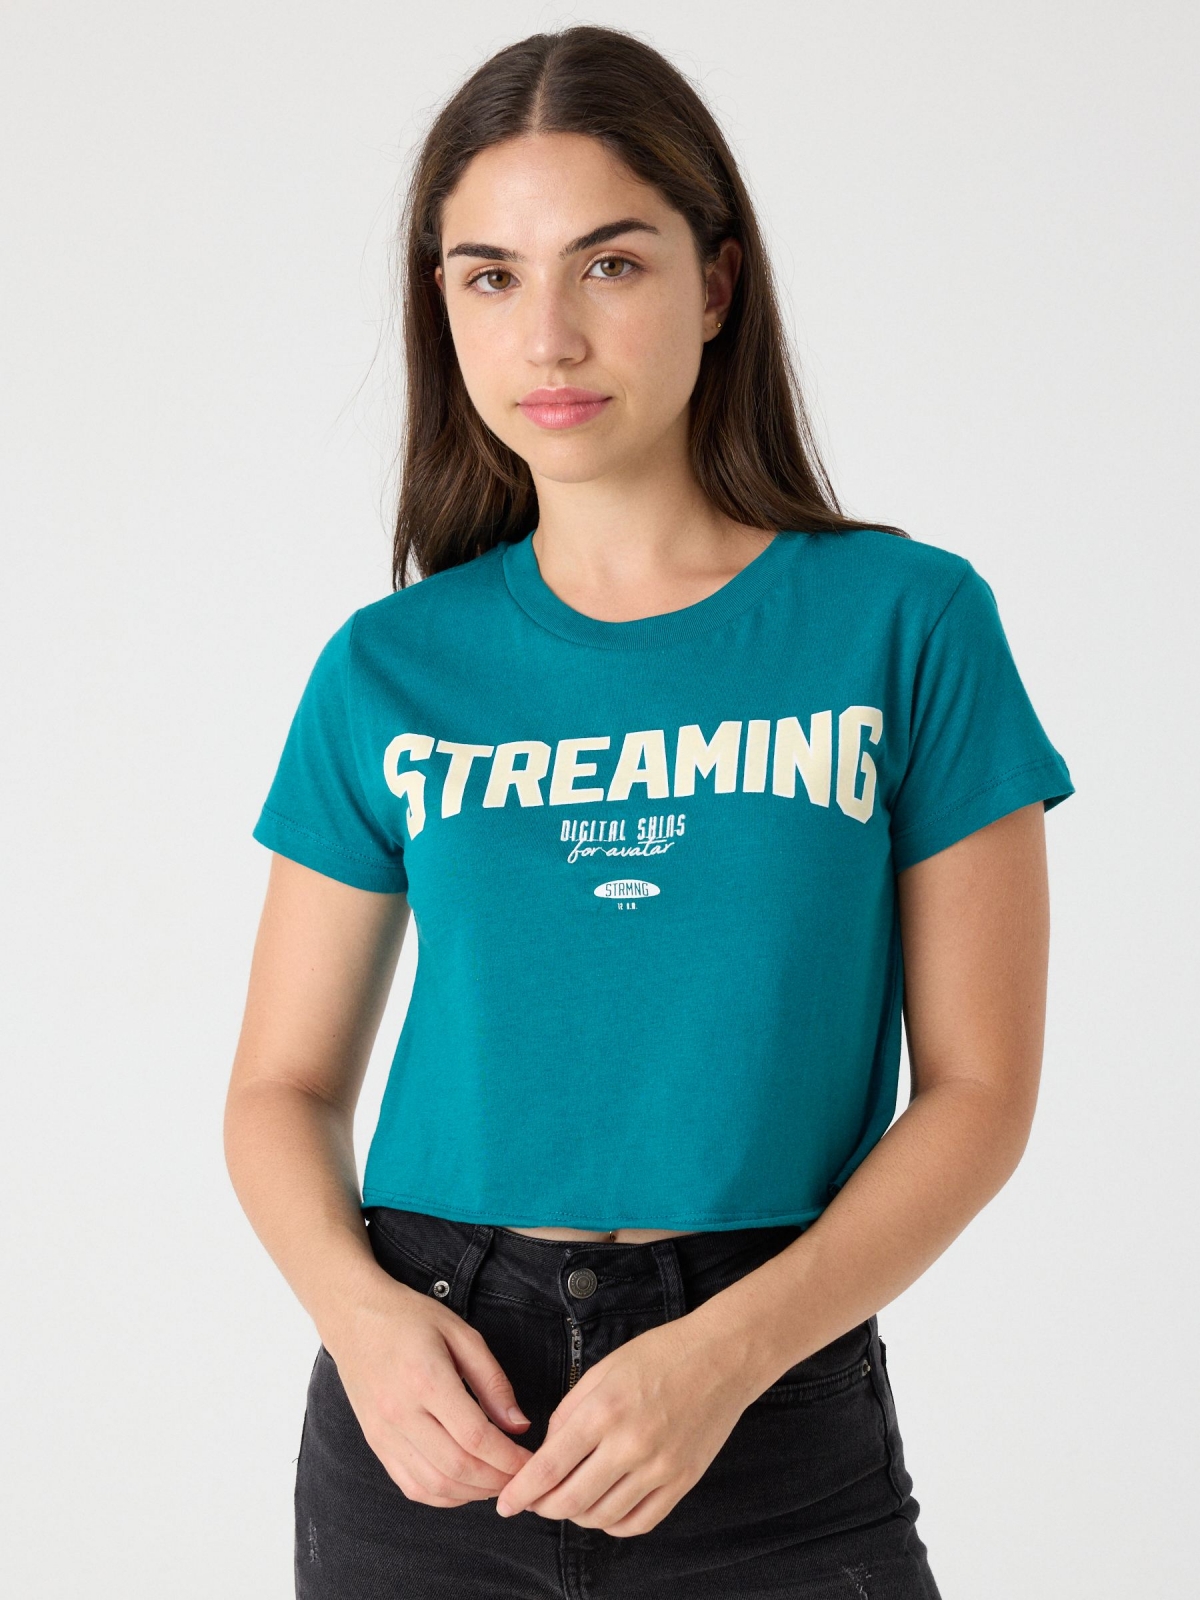 Camiseta streaming verde vista media frontal